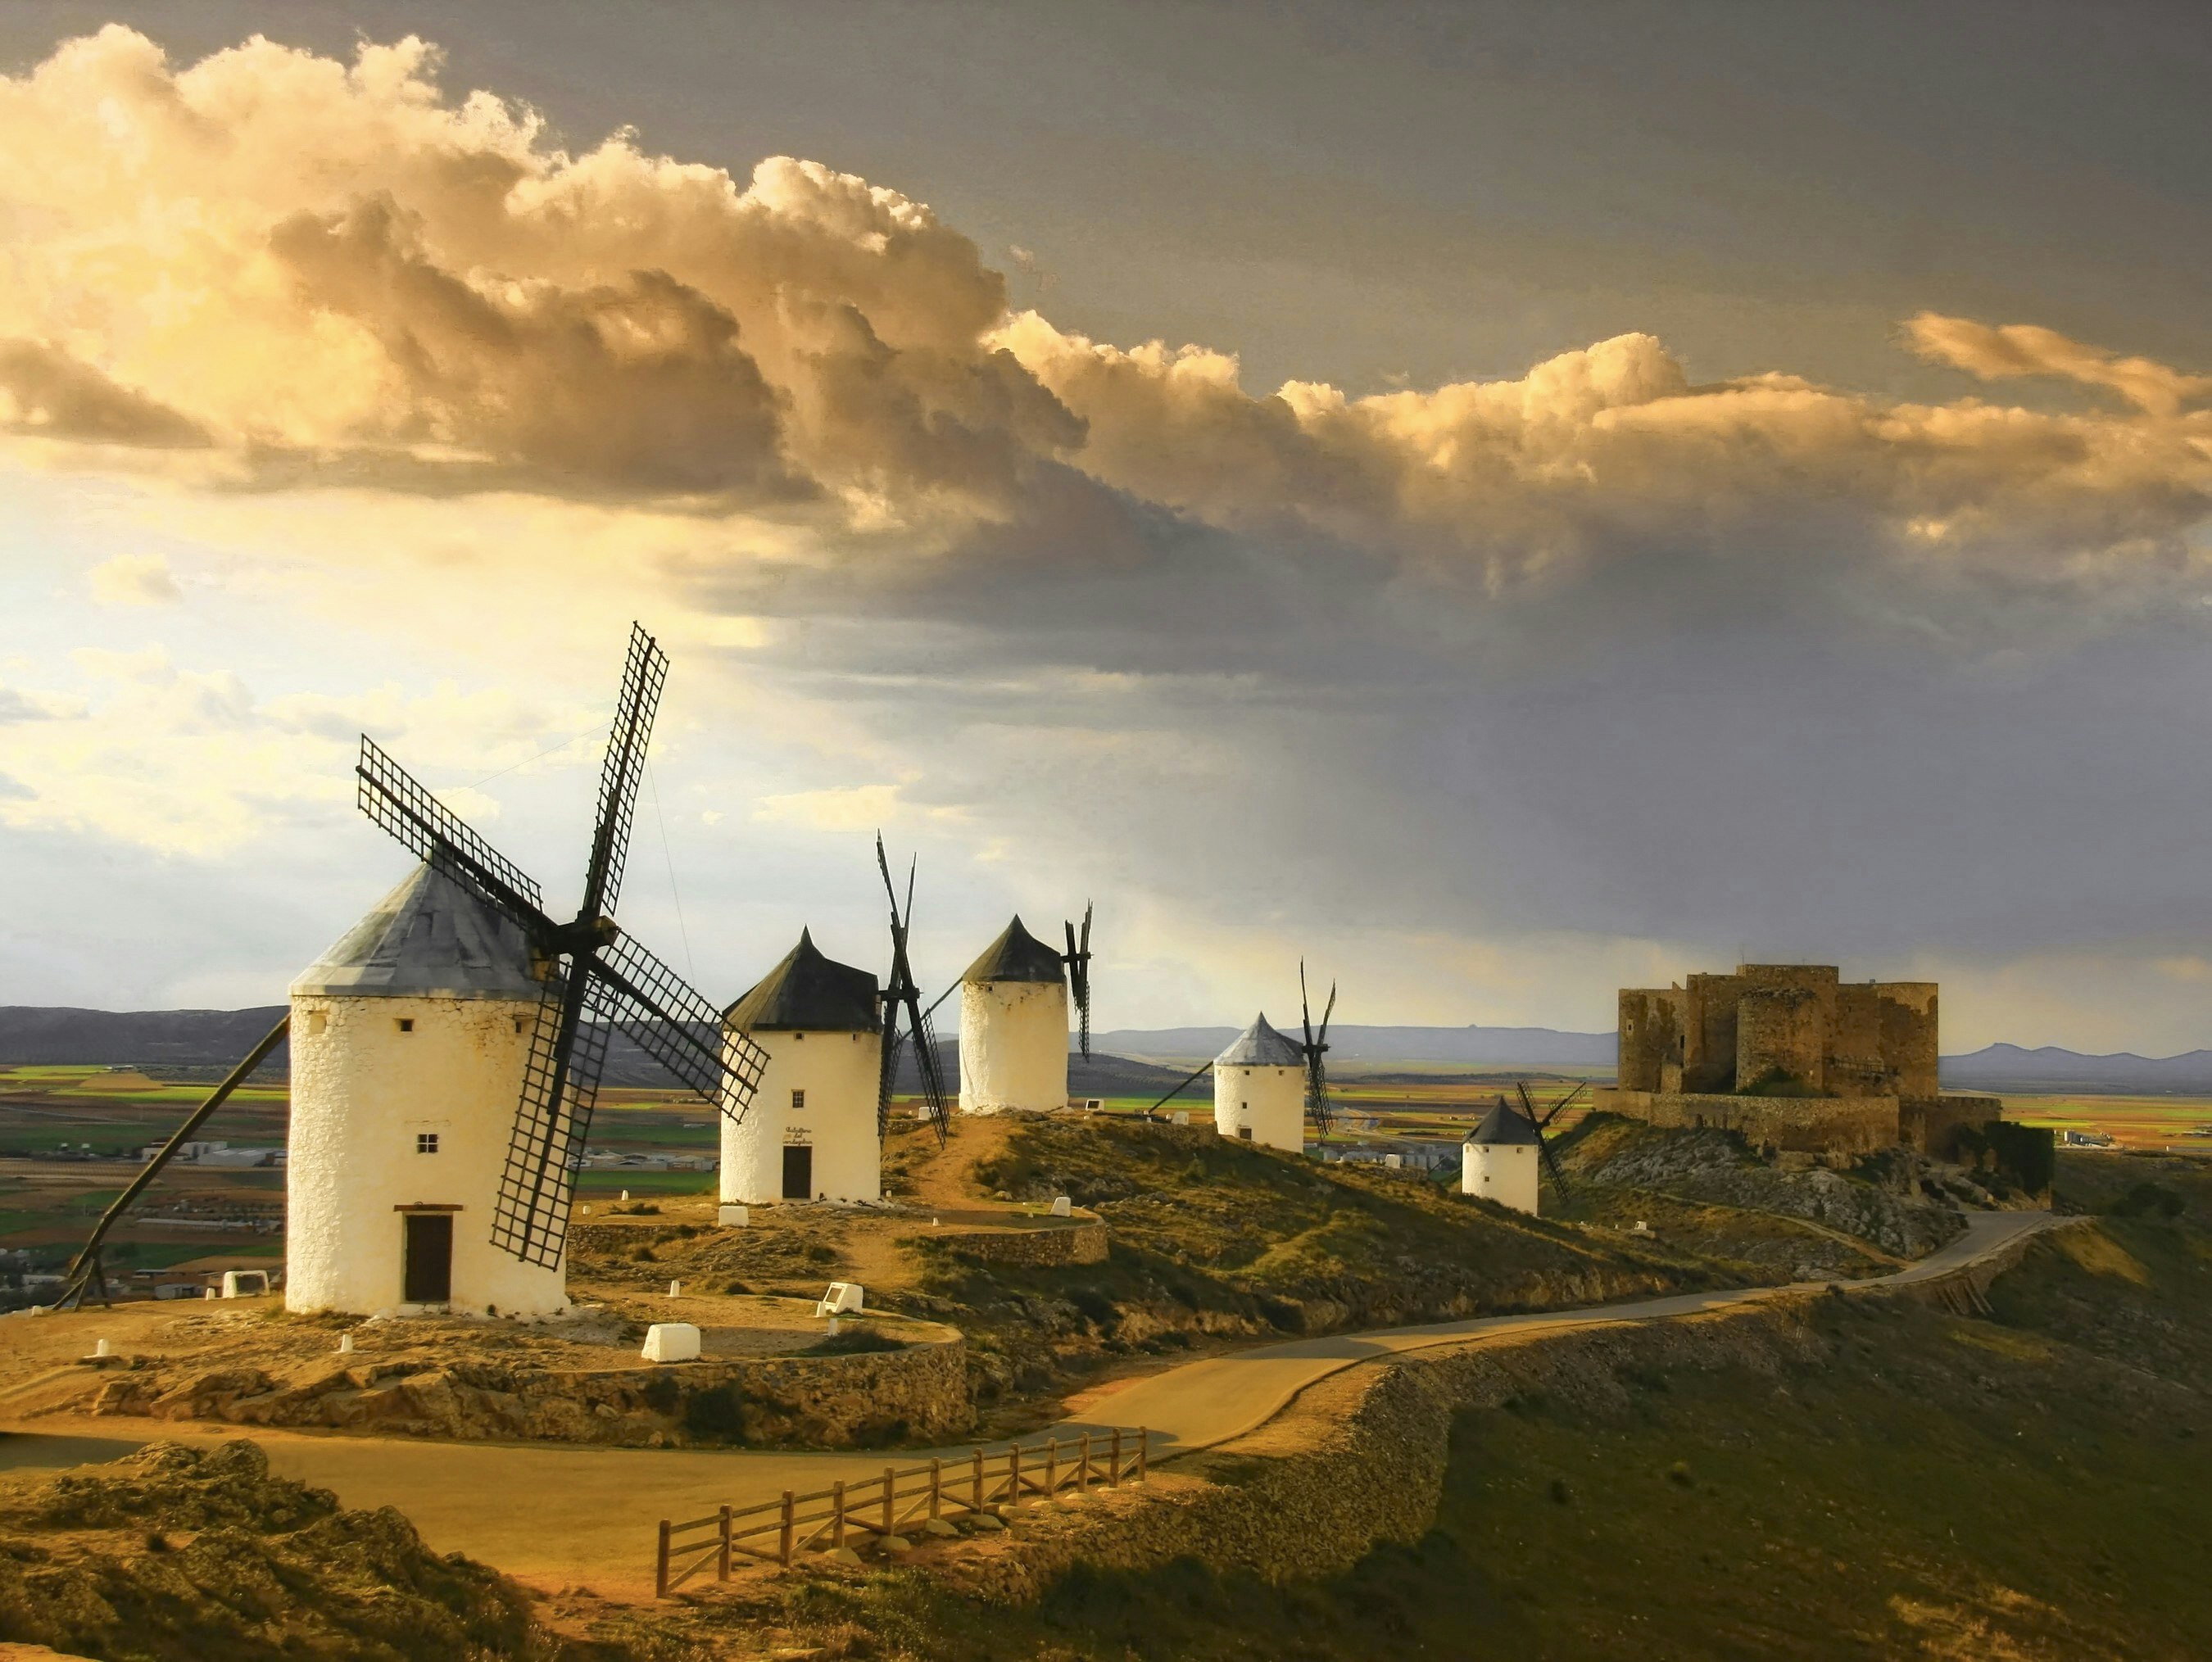 White cylindrical windmills dot a warm-hued plateau at Castilla la Mancha in the Cabañeros region of Spain